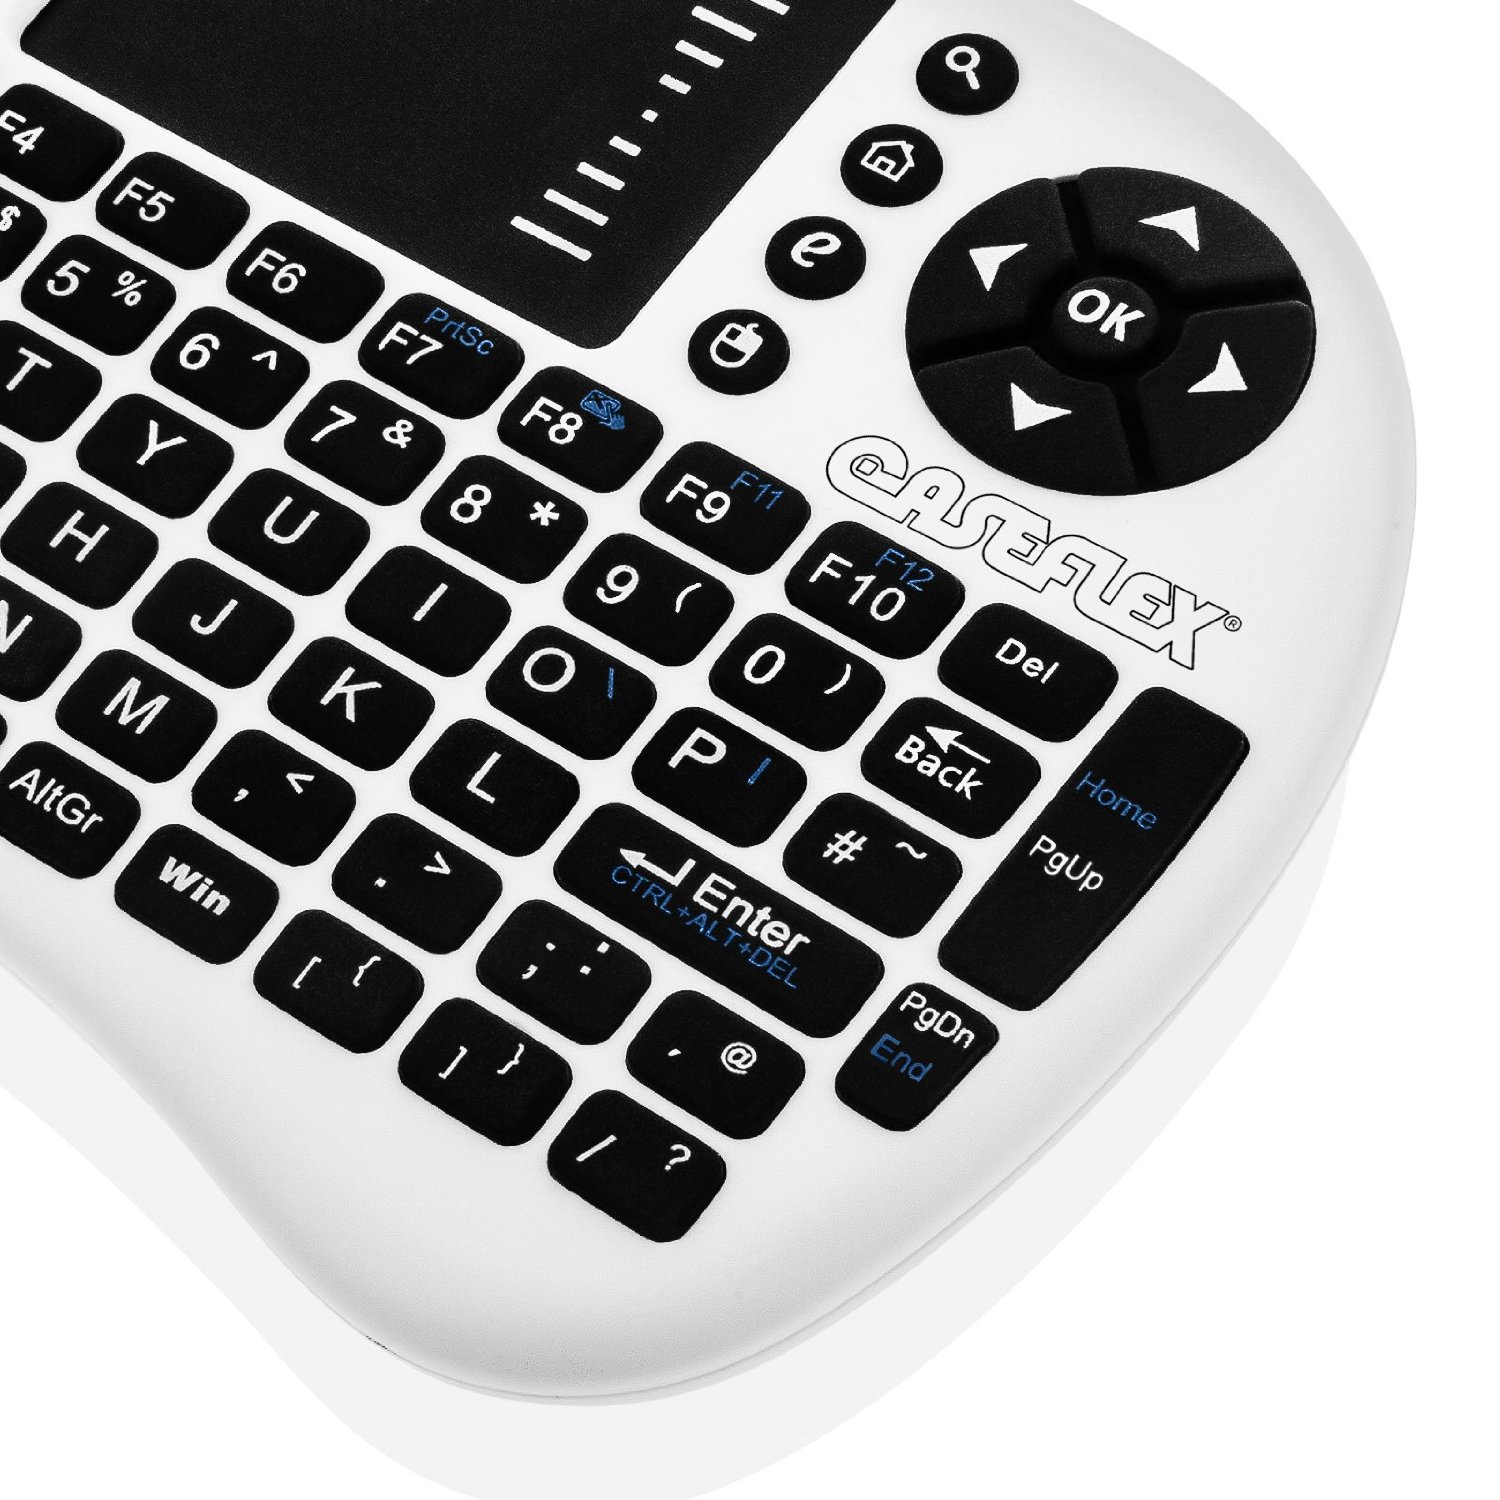 Caseflex 2.4Ghz Mini Wireless Keyboard (UK Version) - White